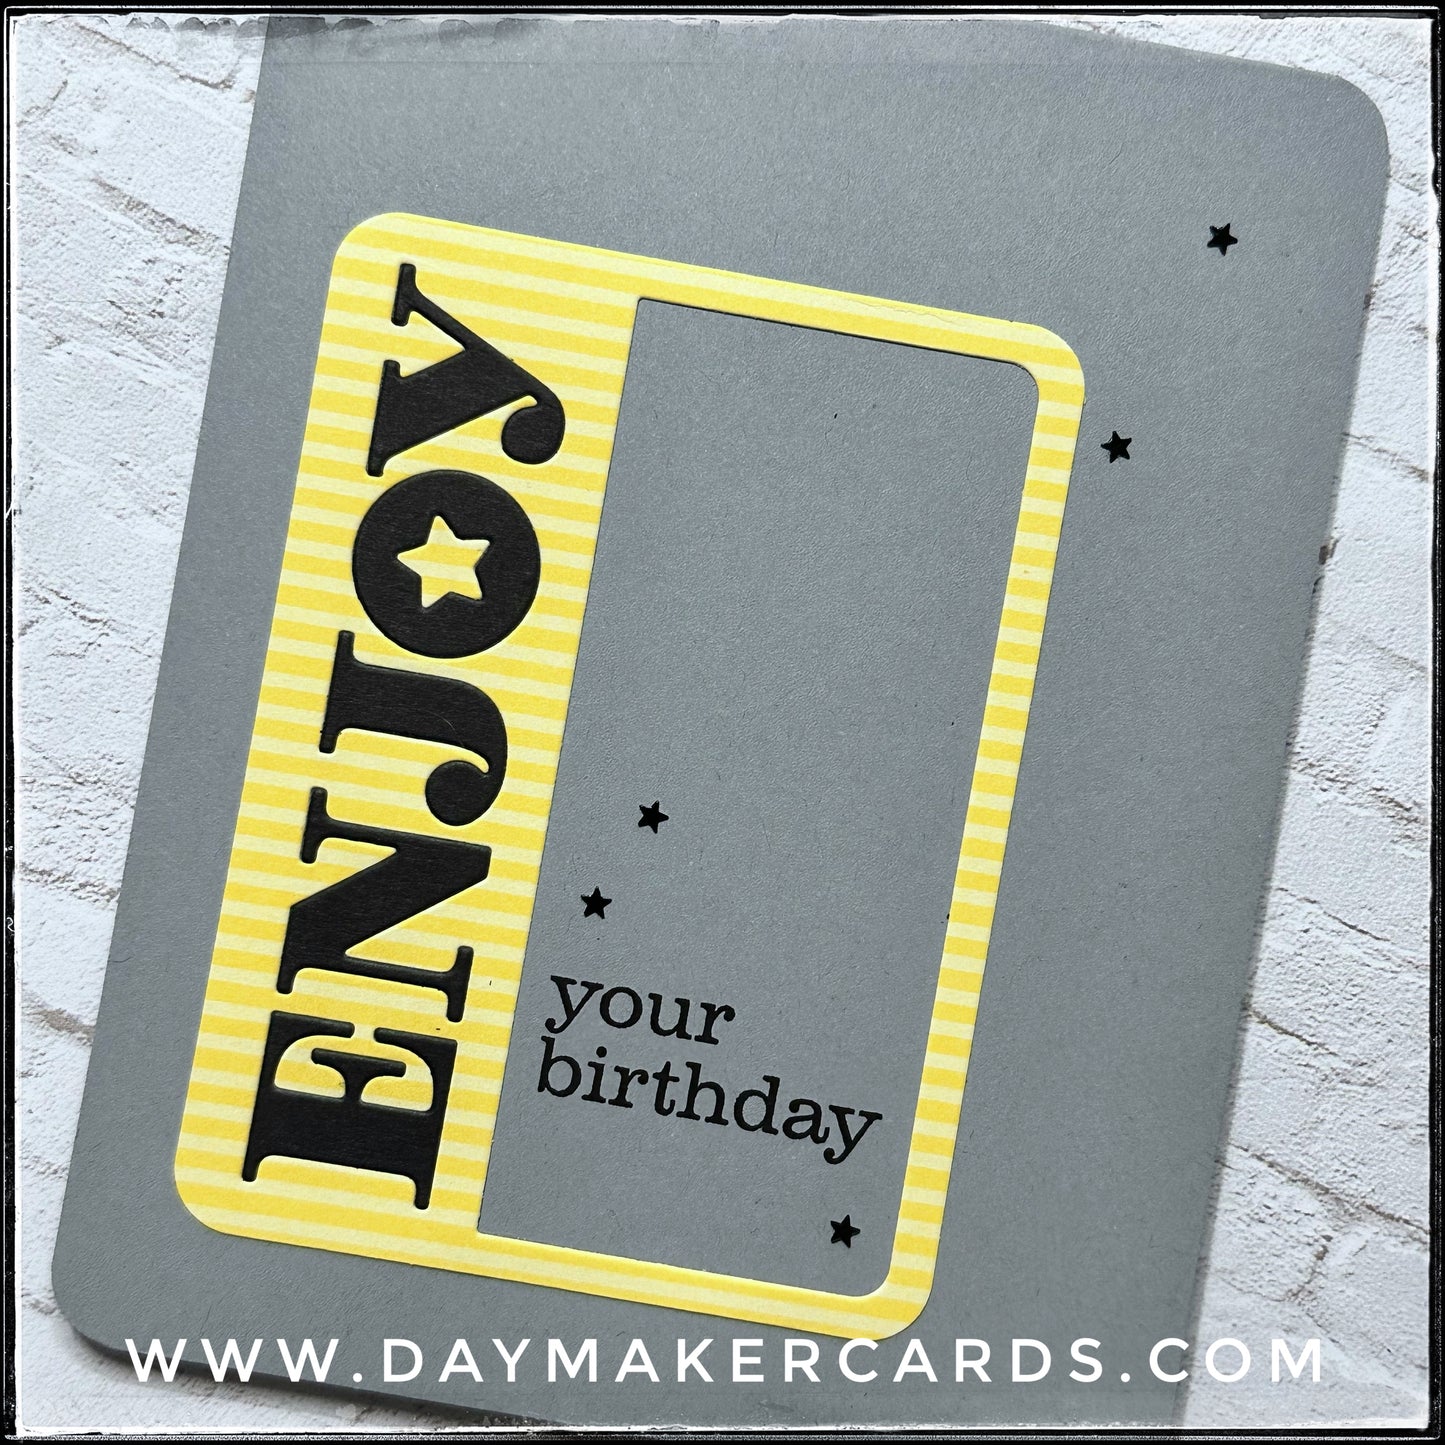 Enjoy Your Birthday Handmade Card